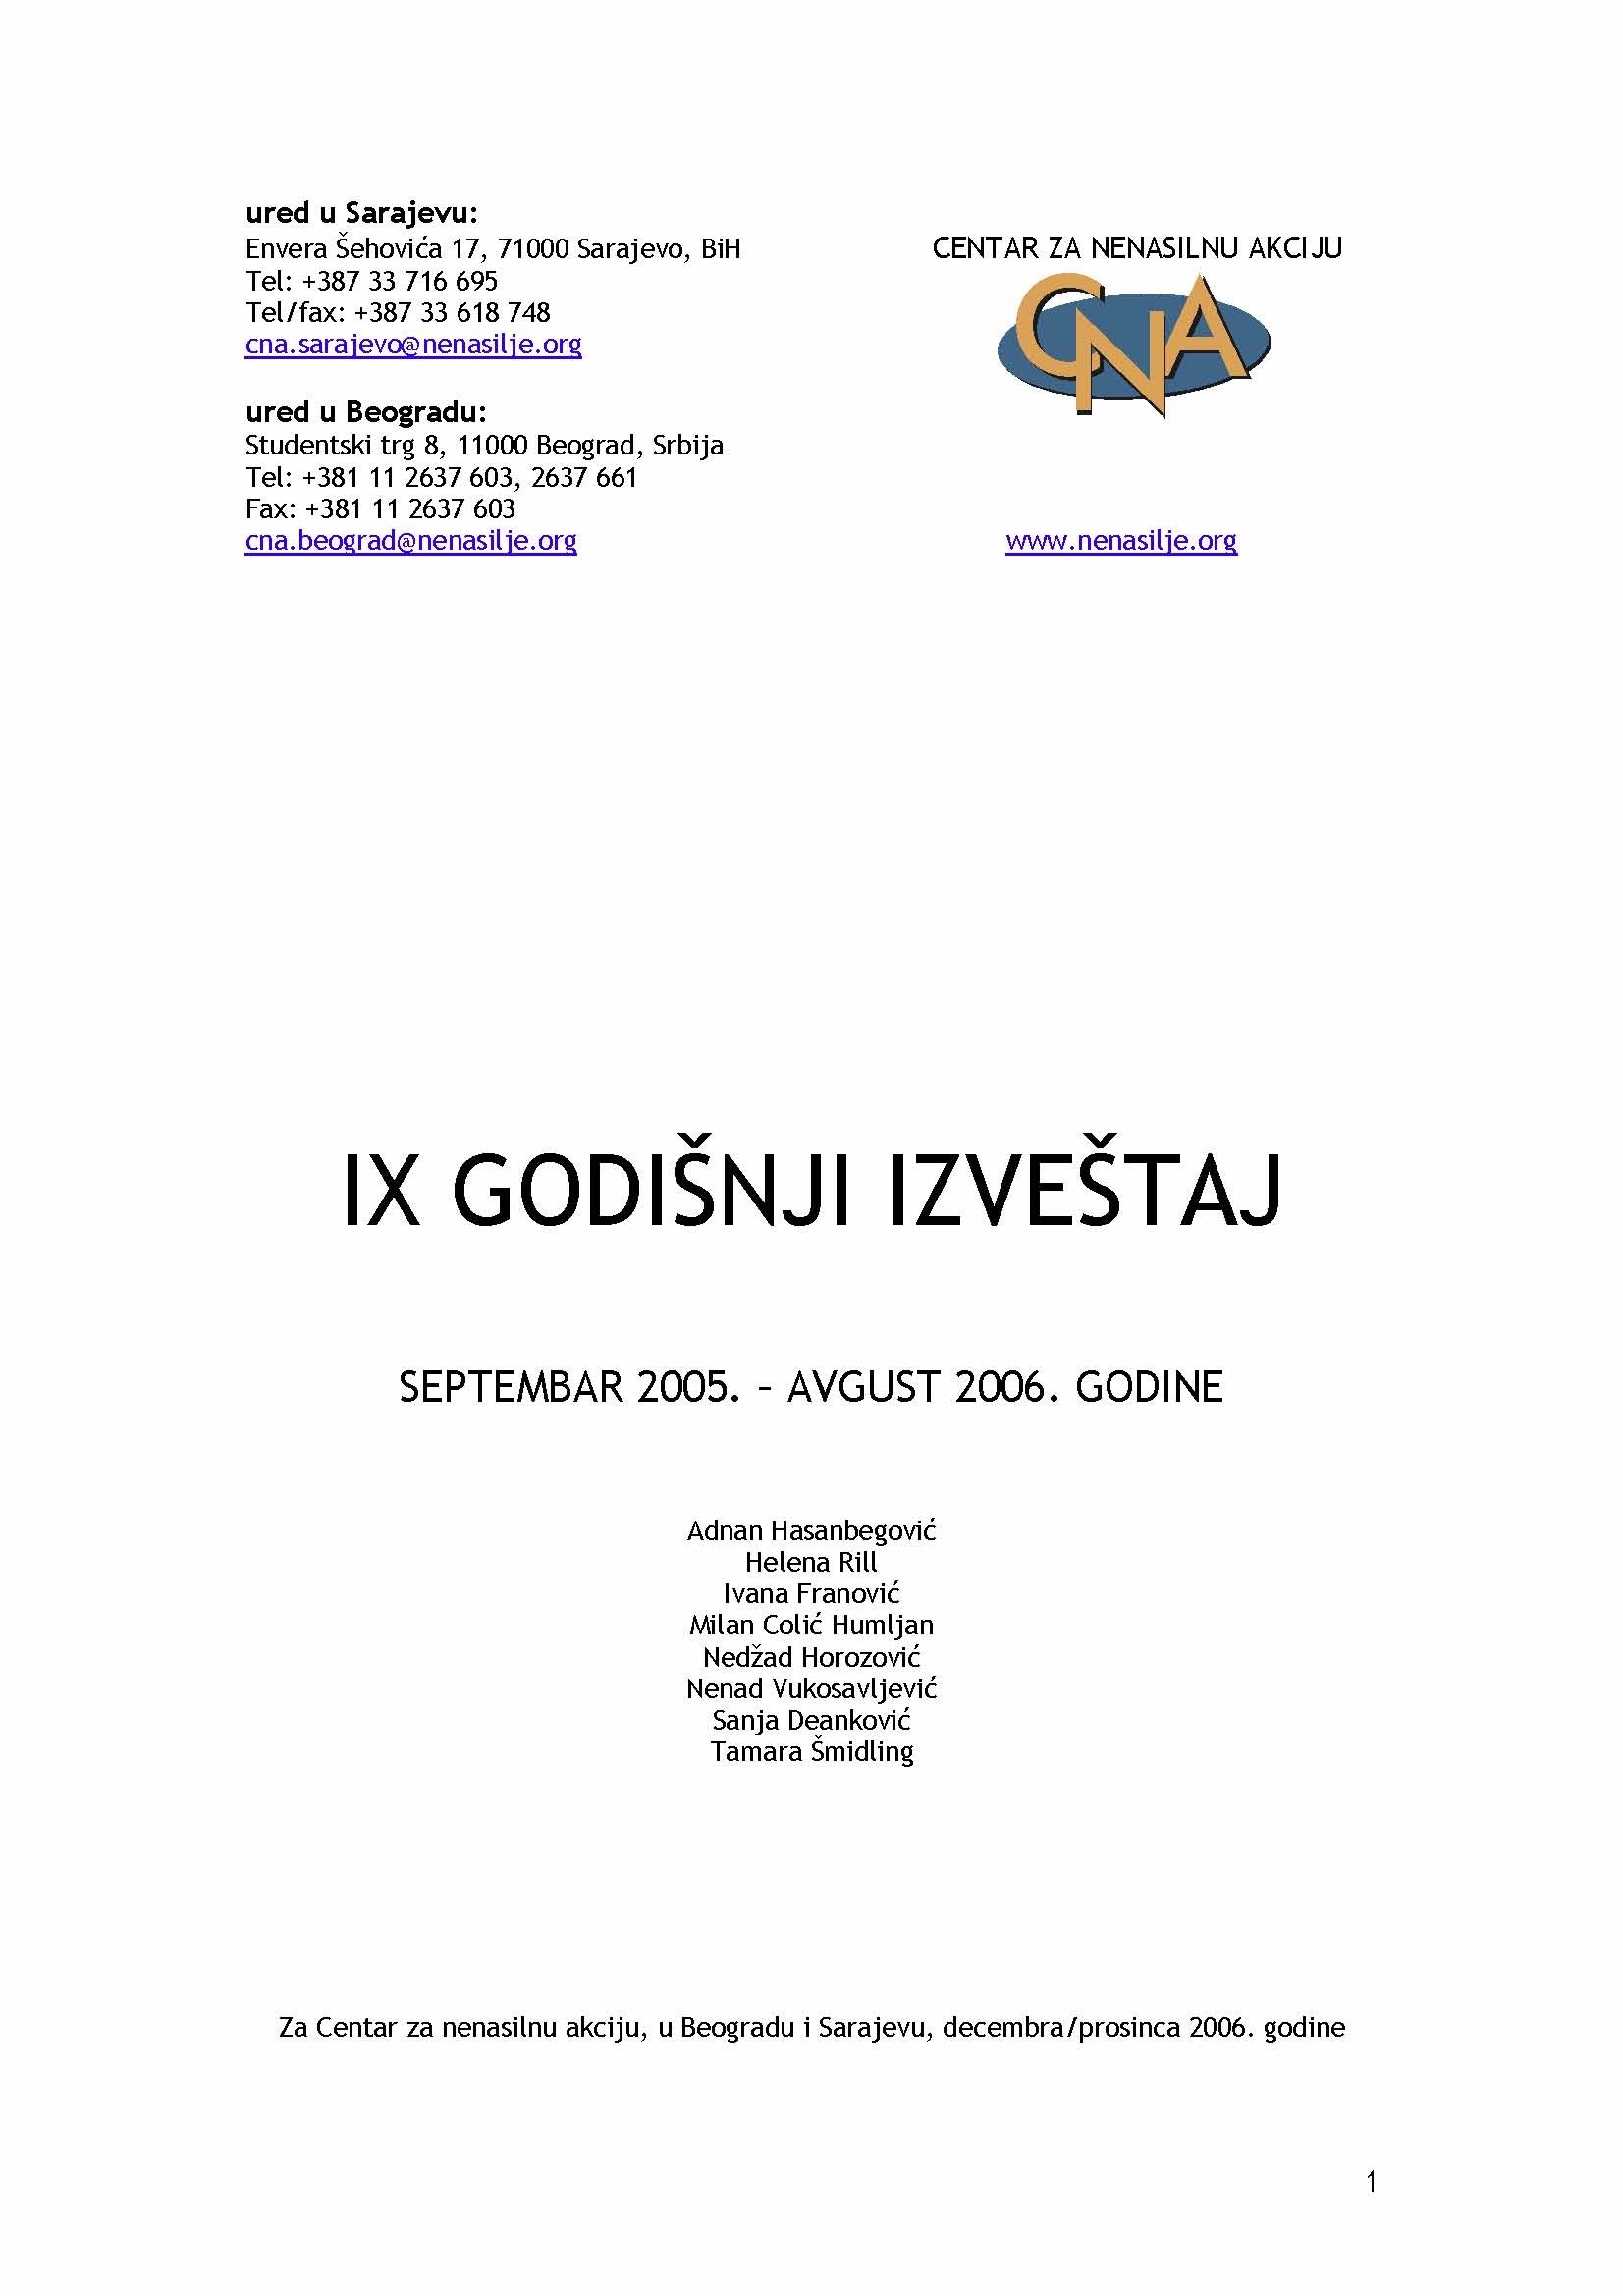 Annual Report 2006 – IX